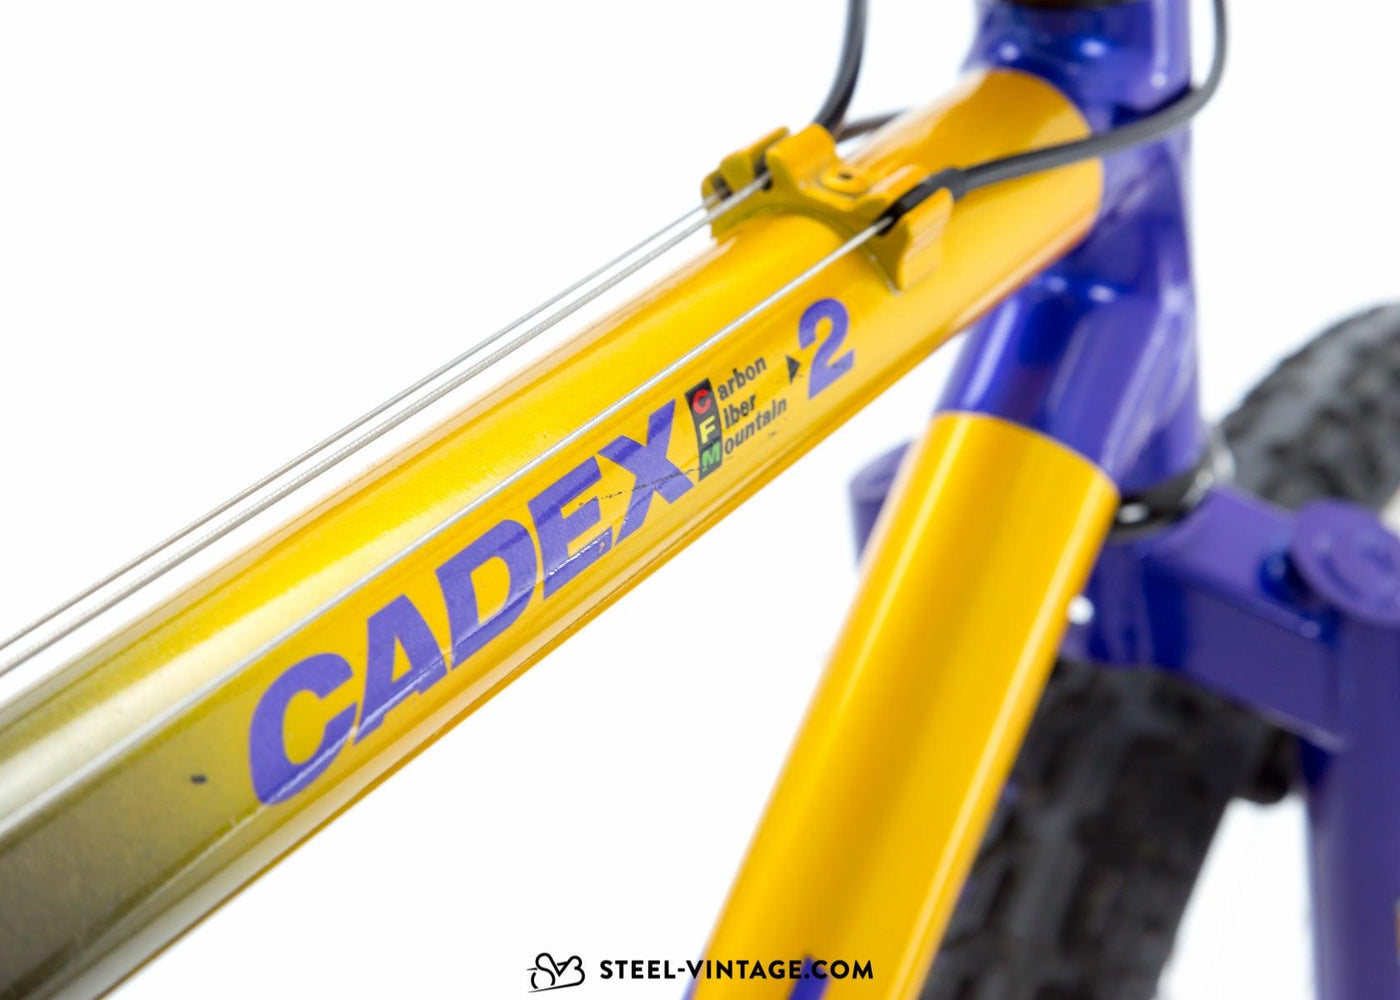 Giant Cadex CFM 2 Vintage Mountainbike - Steel Vintage Bikes